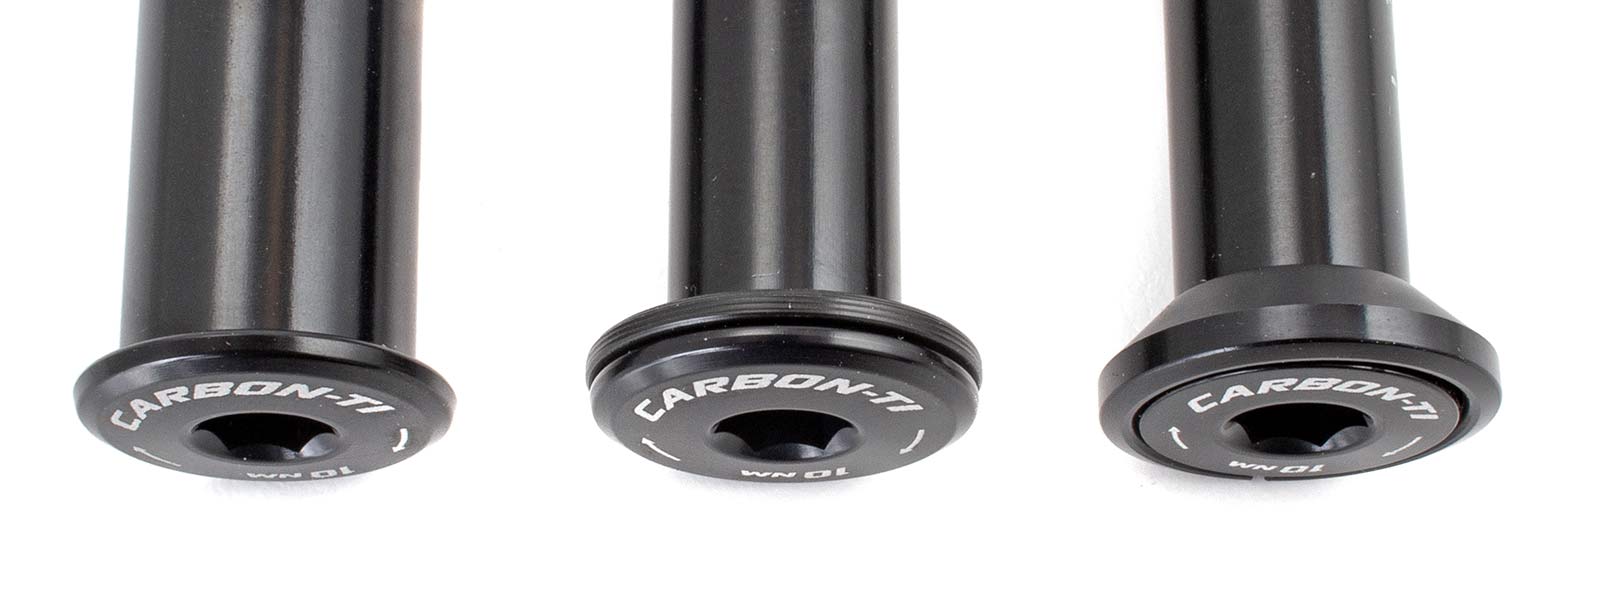 Carbon-Ti X-Lock Evo thru axles, lightweight 7075 alloy bolt-on replacement thru-axles, head types